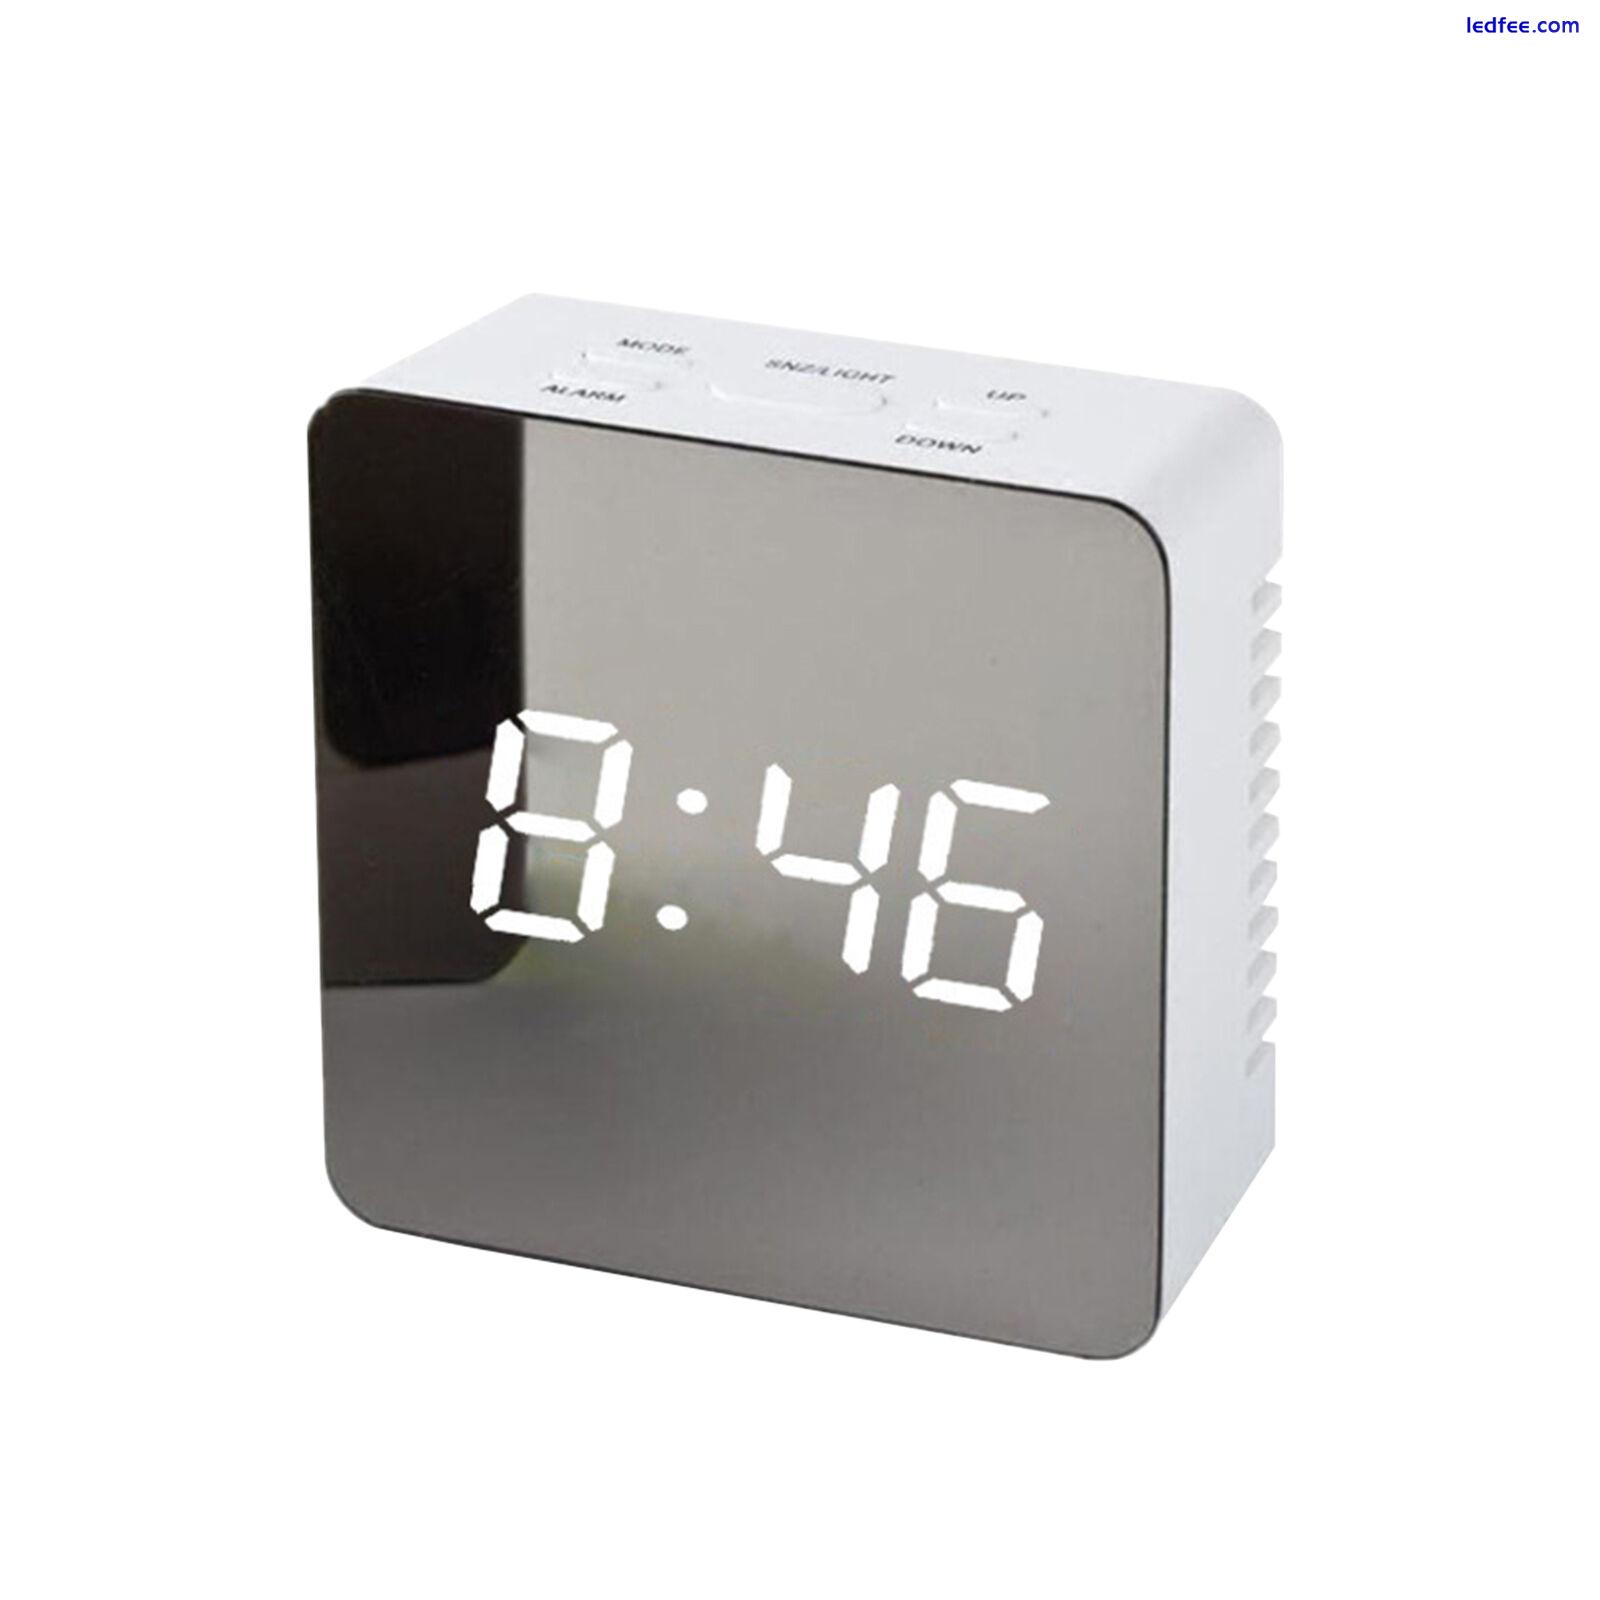 Table Top Temperature Display Electronic LED Mirror Alarm Clock Makeup 5 Buttons 4 